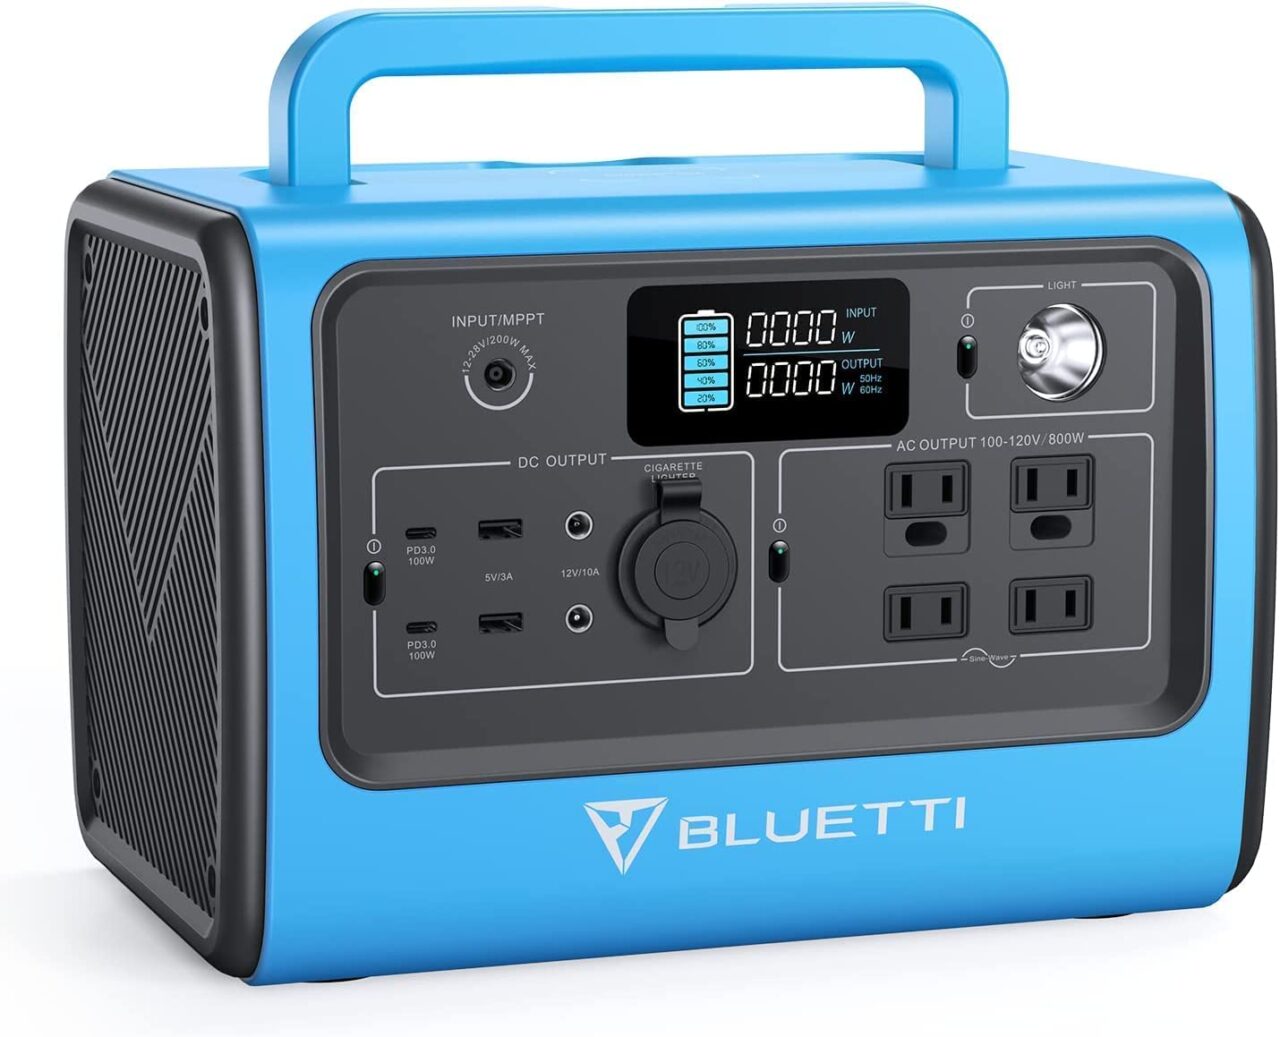 Win Bluetti EB70s Power Station Giveaway